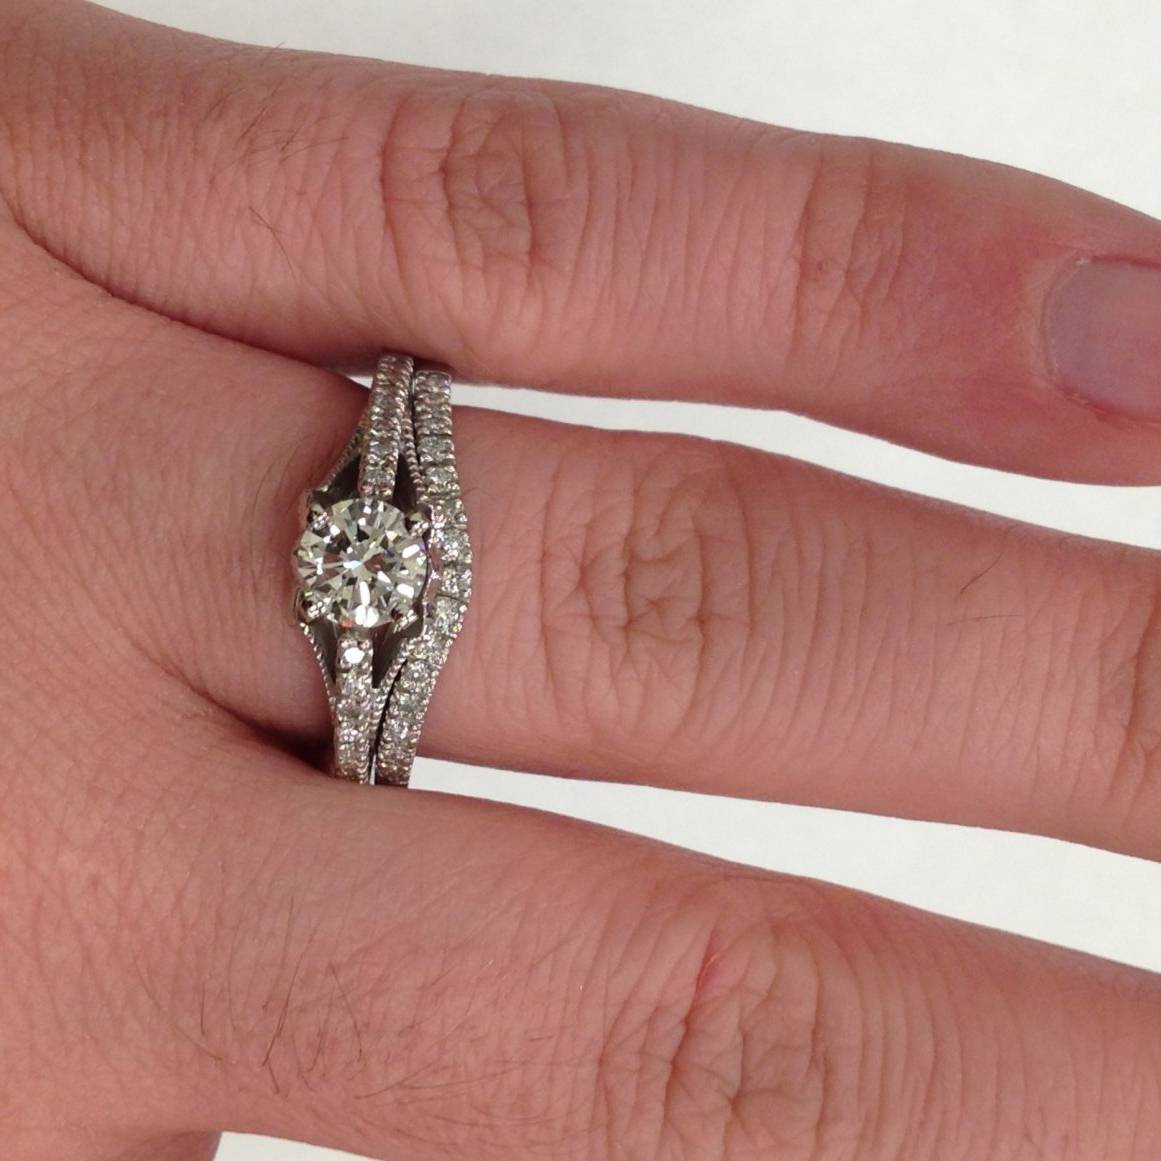 Pompeii3 Platinum 1ct Diamond Engagement Matching Wedding Ring Set Vintage Solitaire